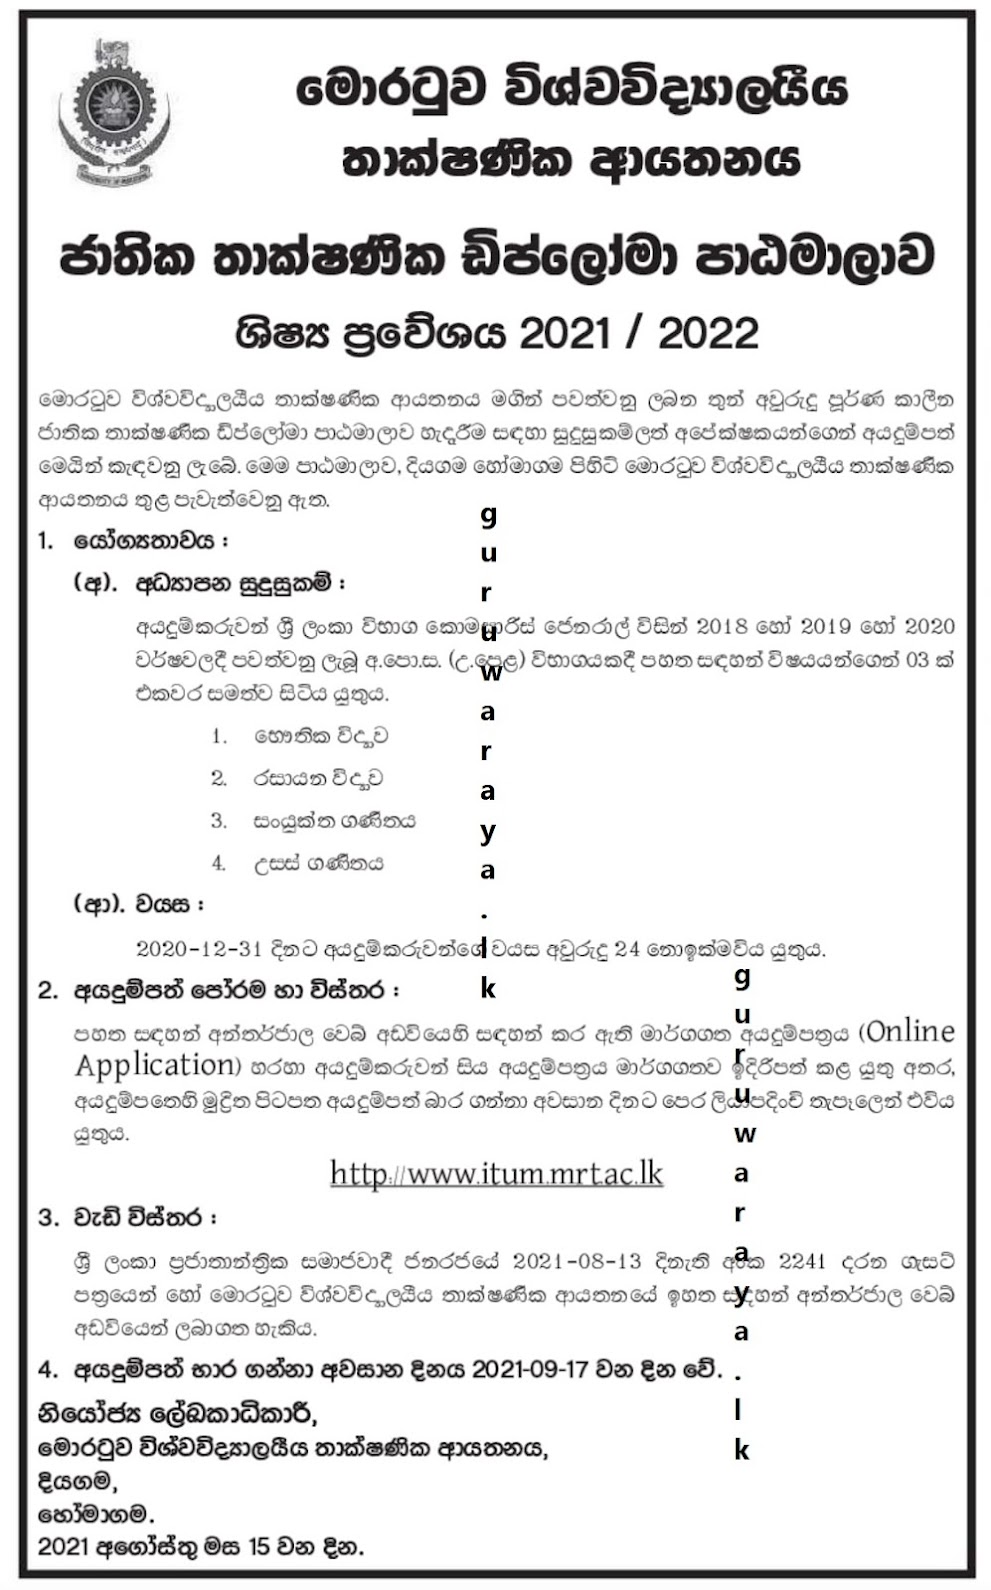 National Diploma in Technology 2021 - Moratuwa University - Sinhala Details